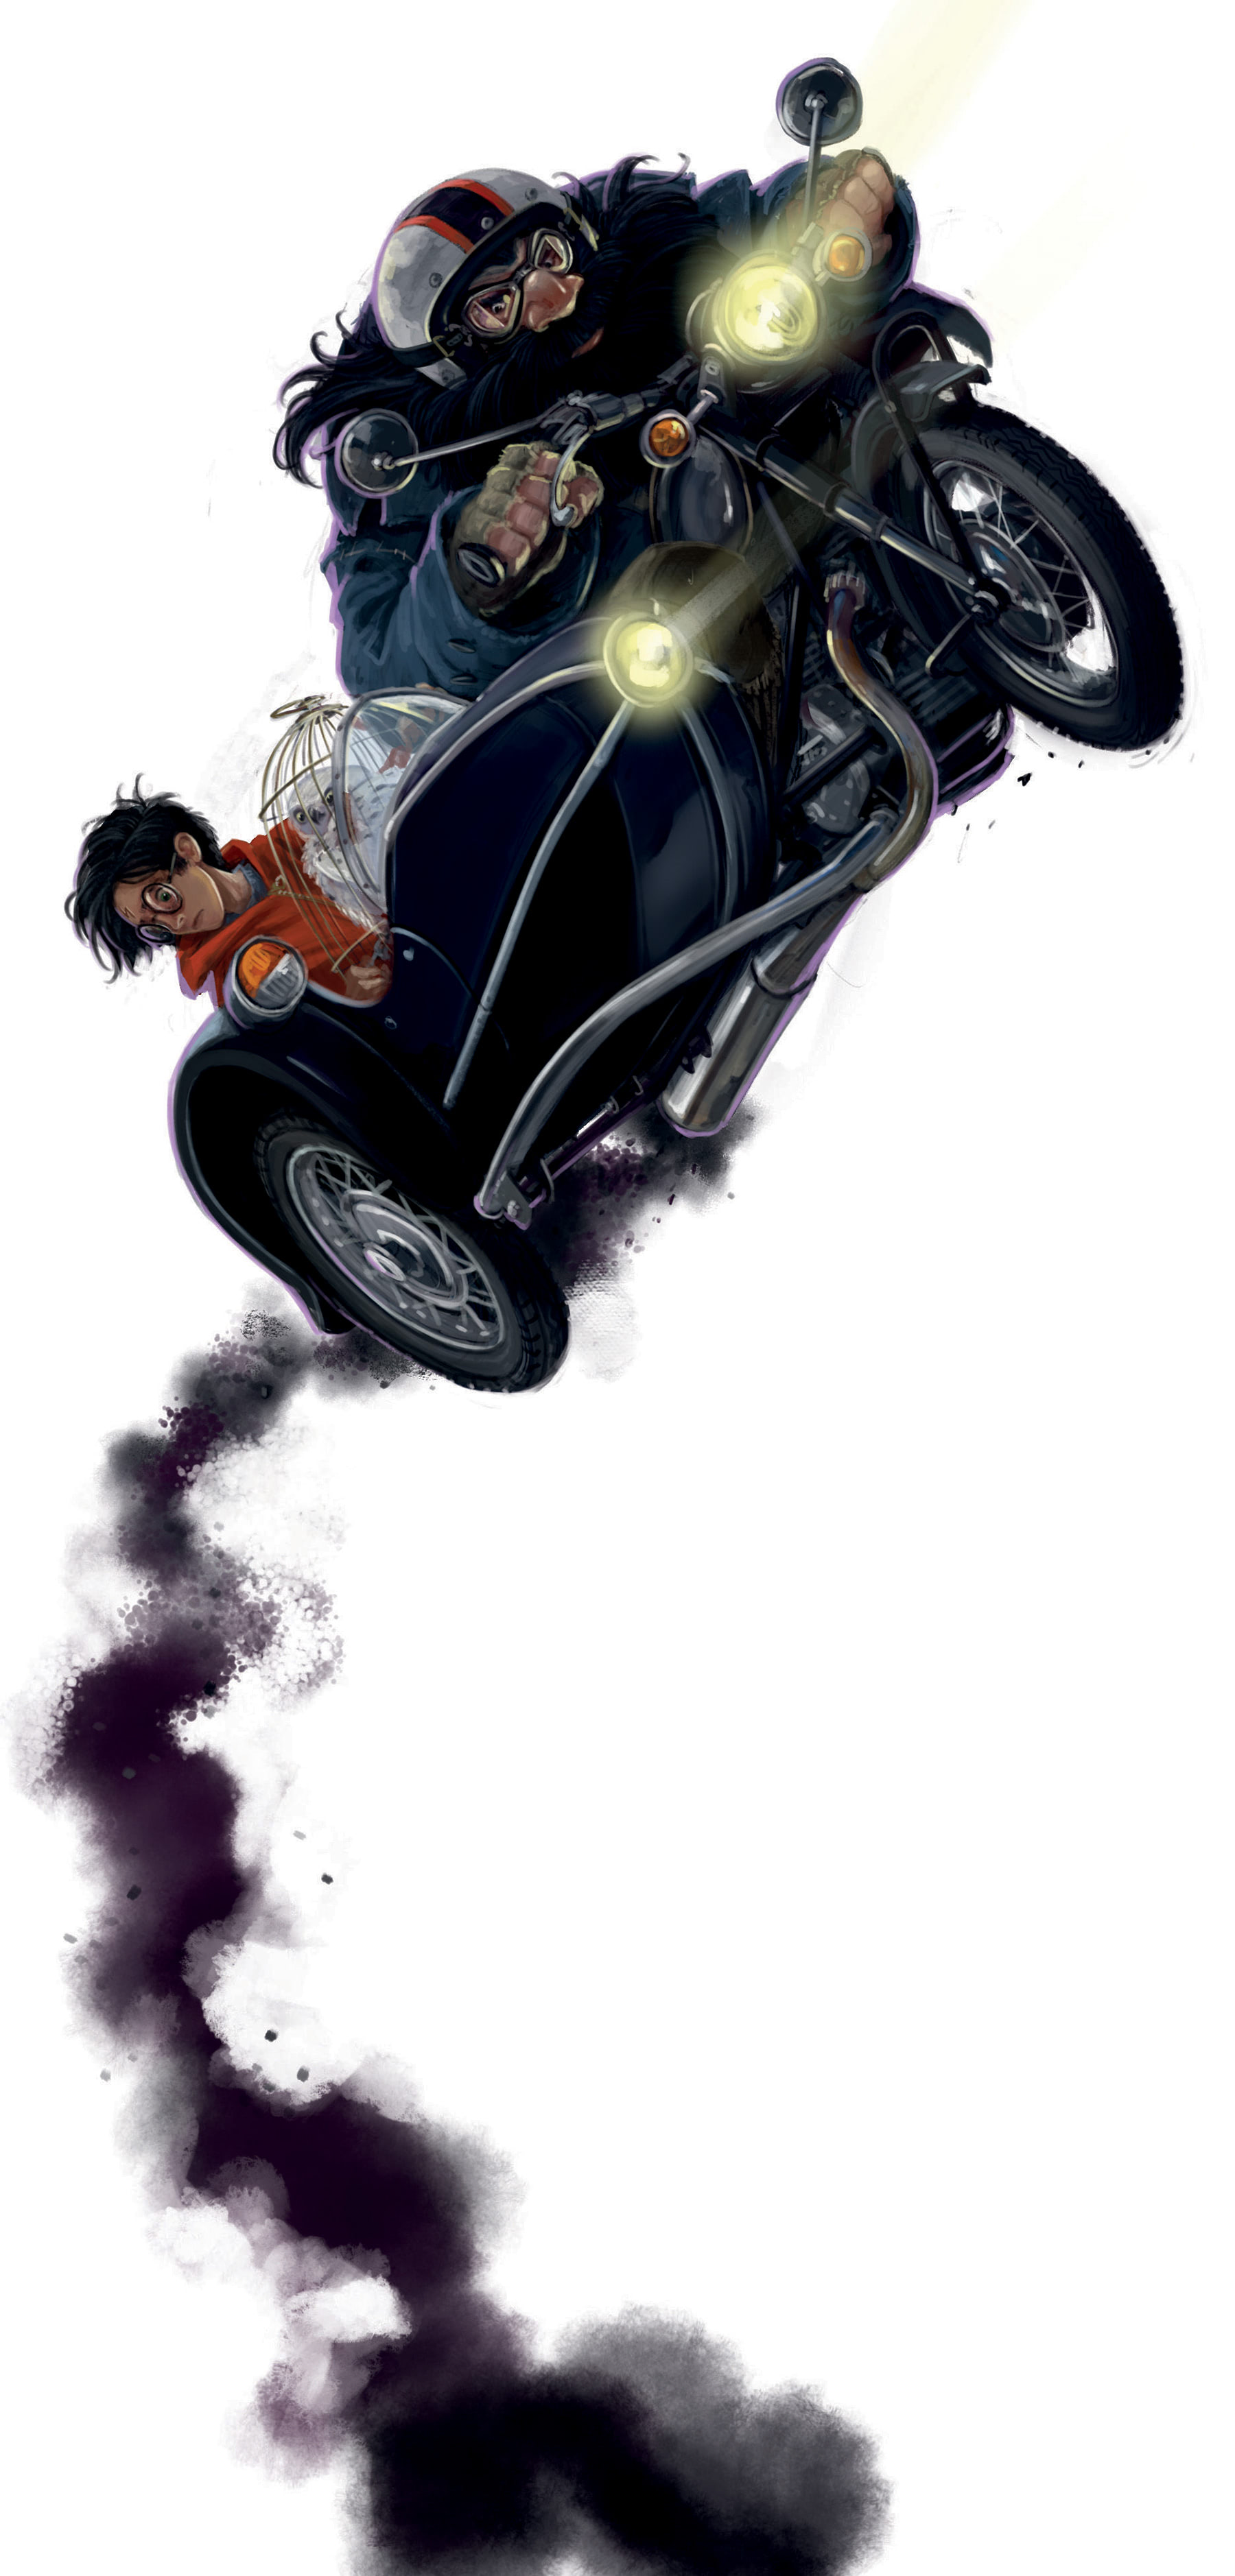 Hagrid and Harry escape Privet Drive